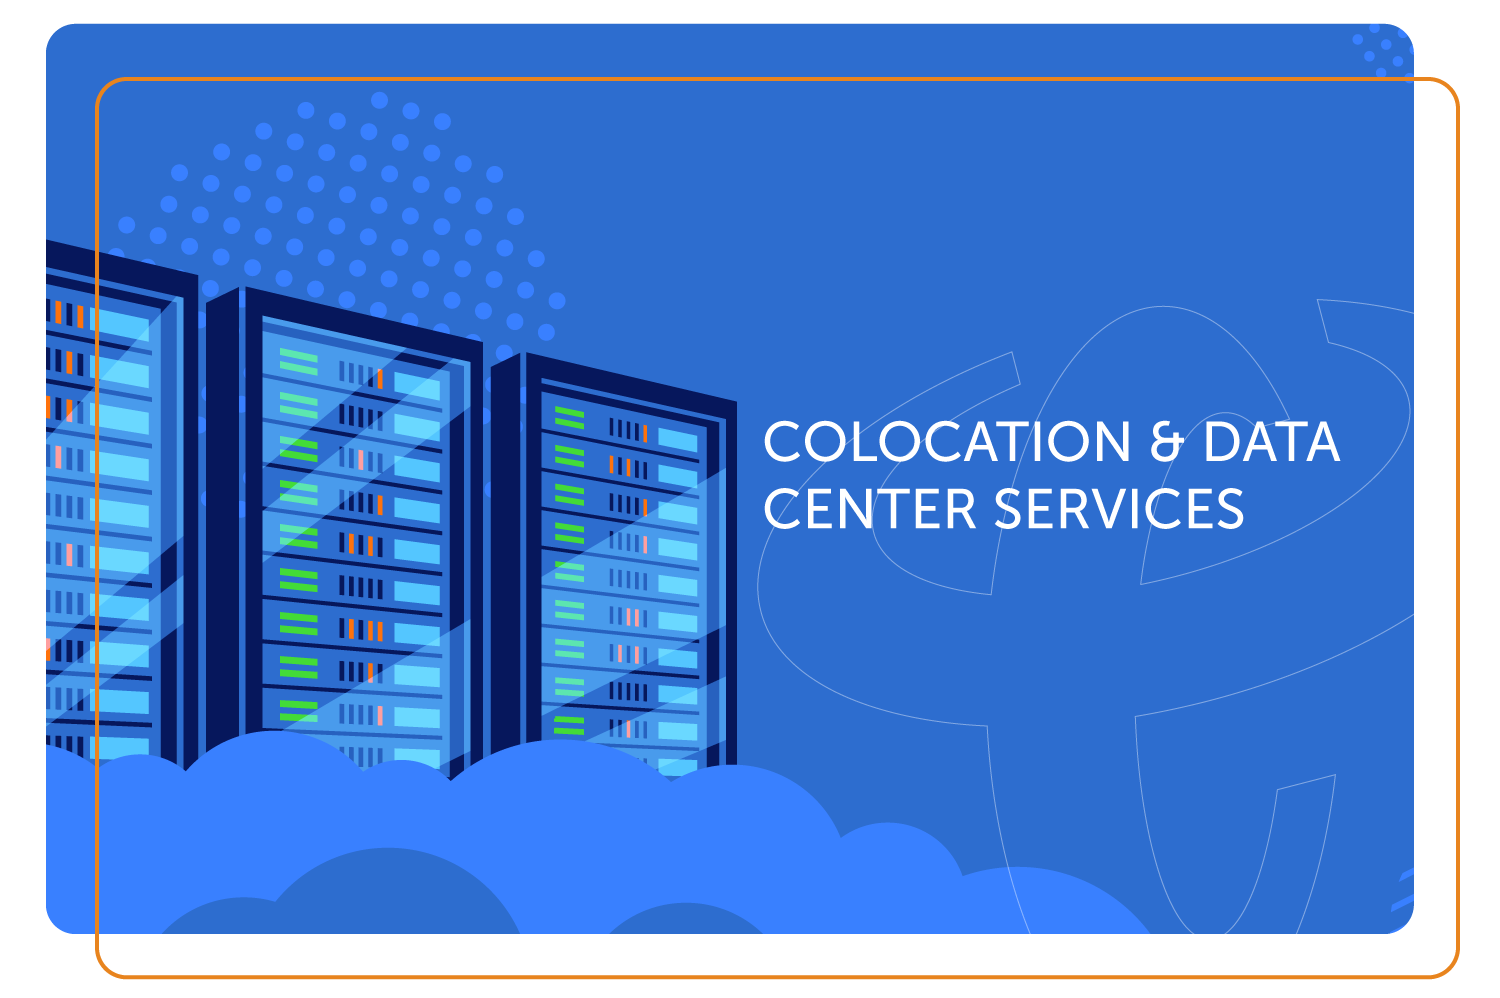 Colocation & Data Center Services